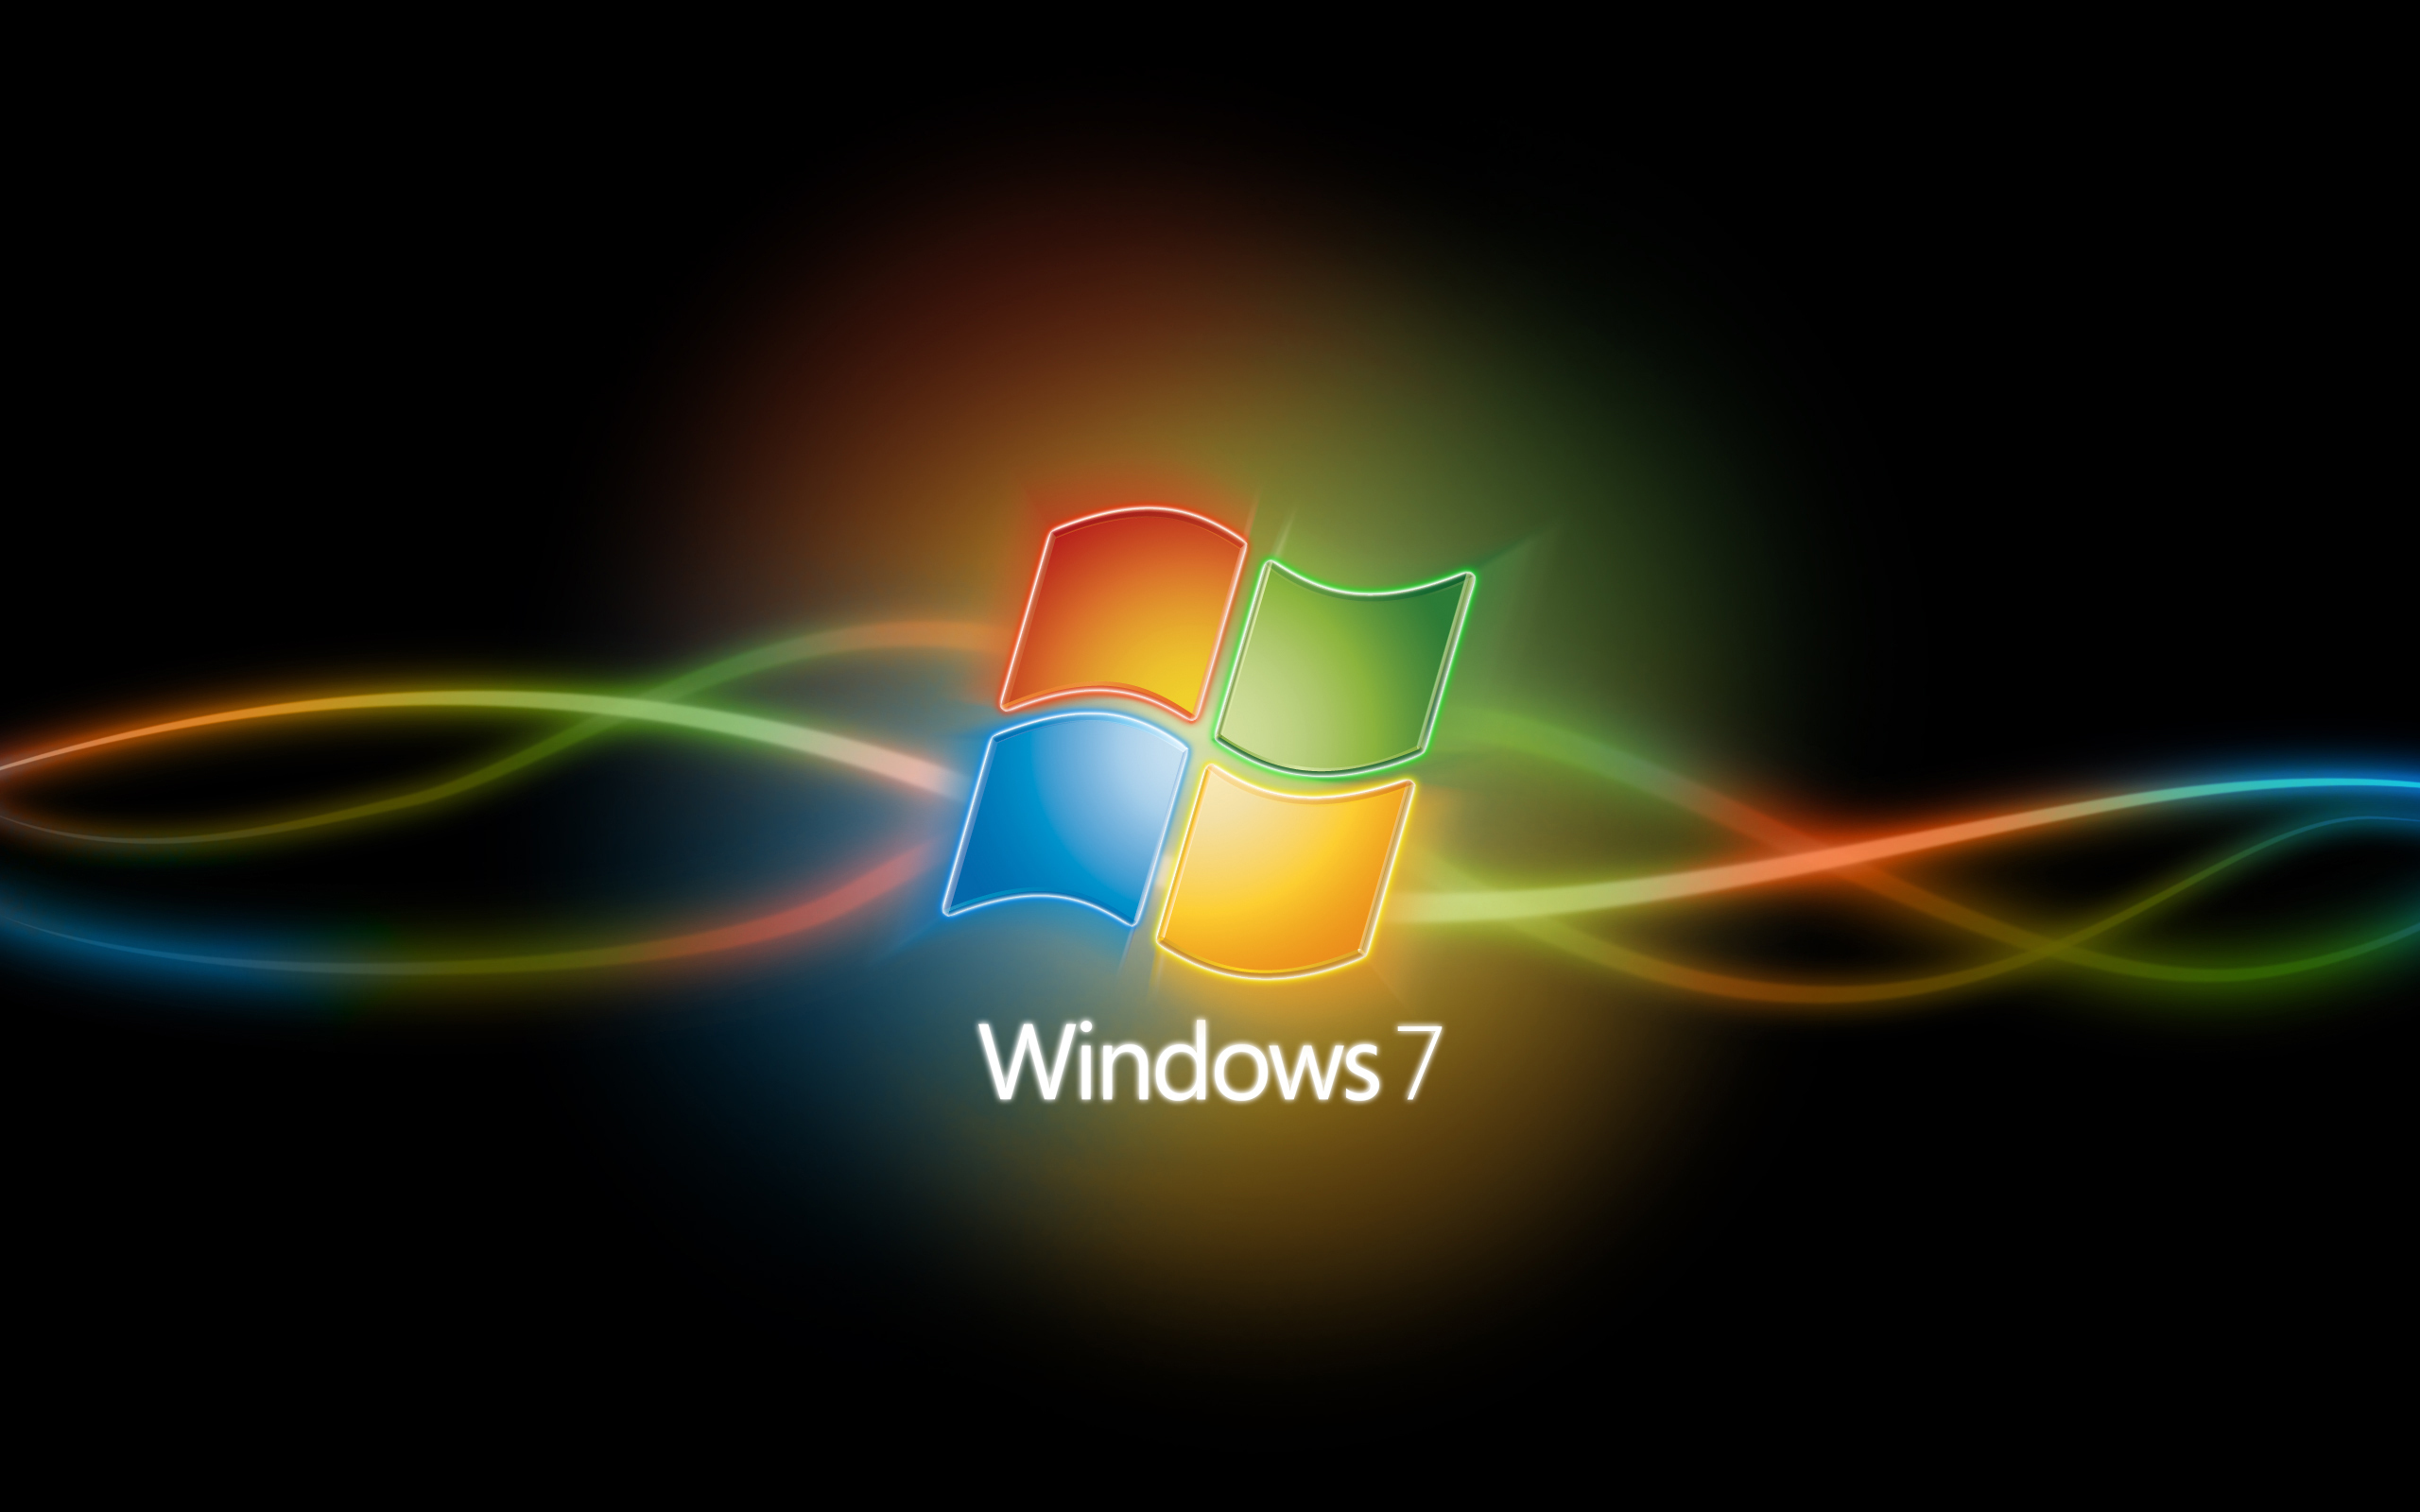 logo, windows 7, windows, microsoft, technology iphone wallpaper